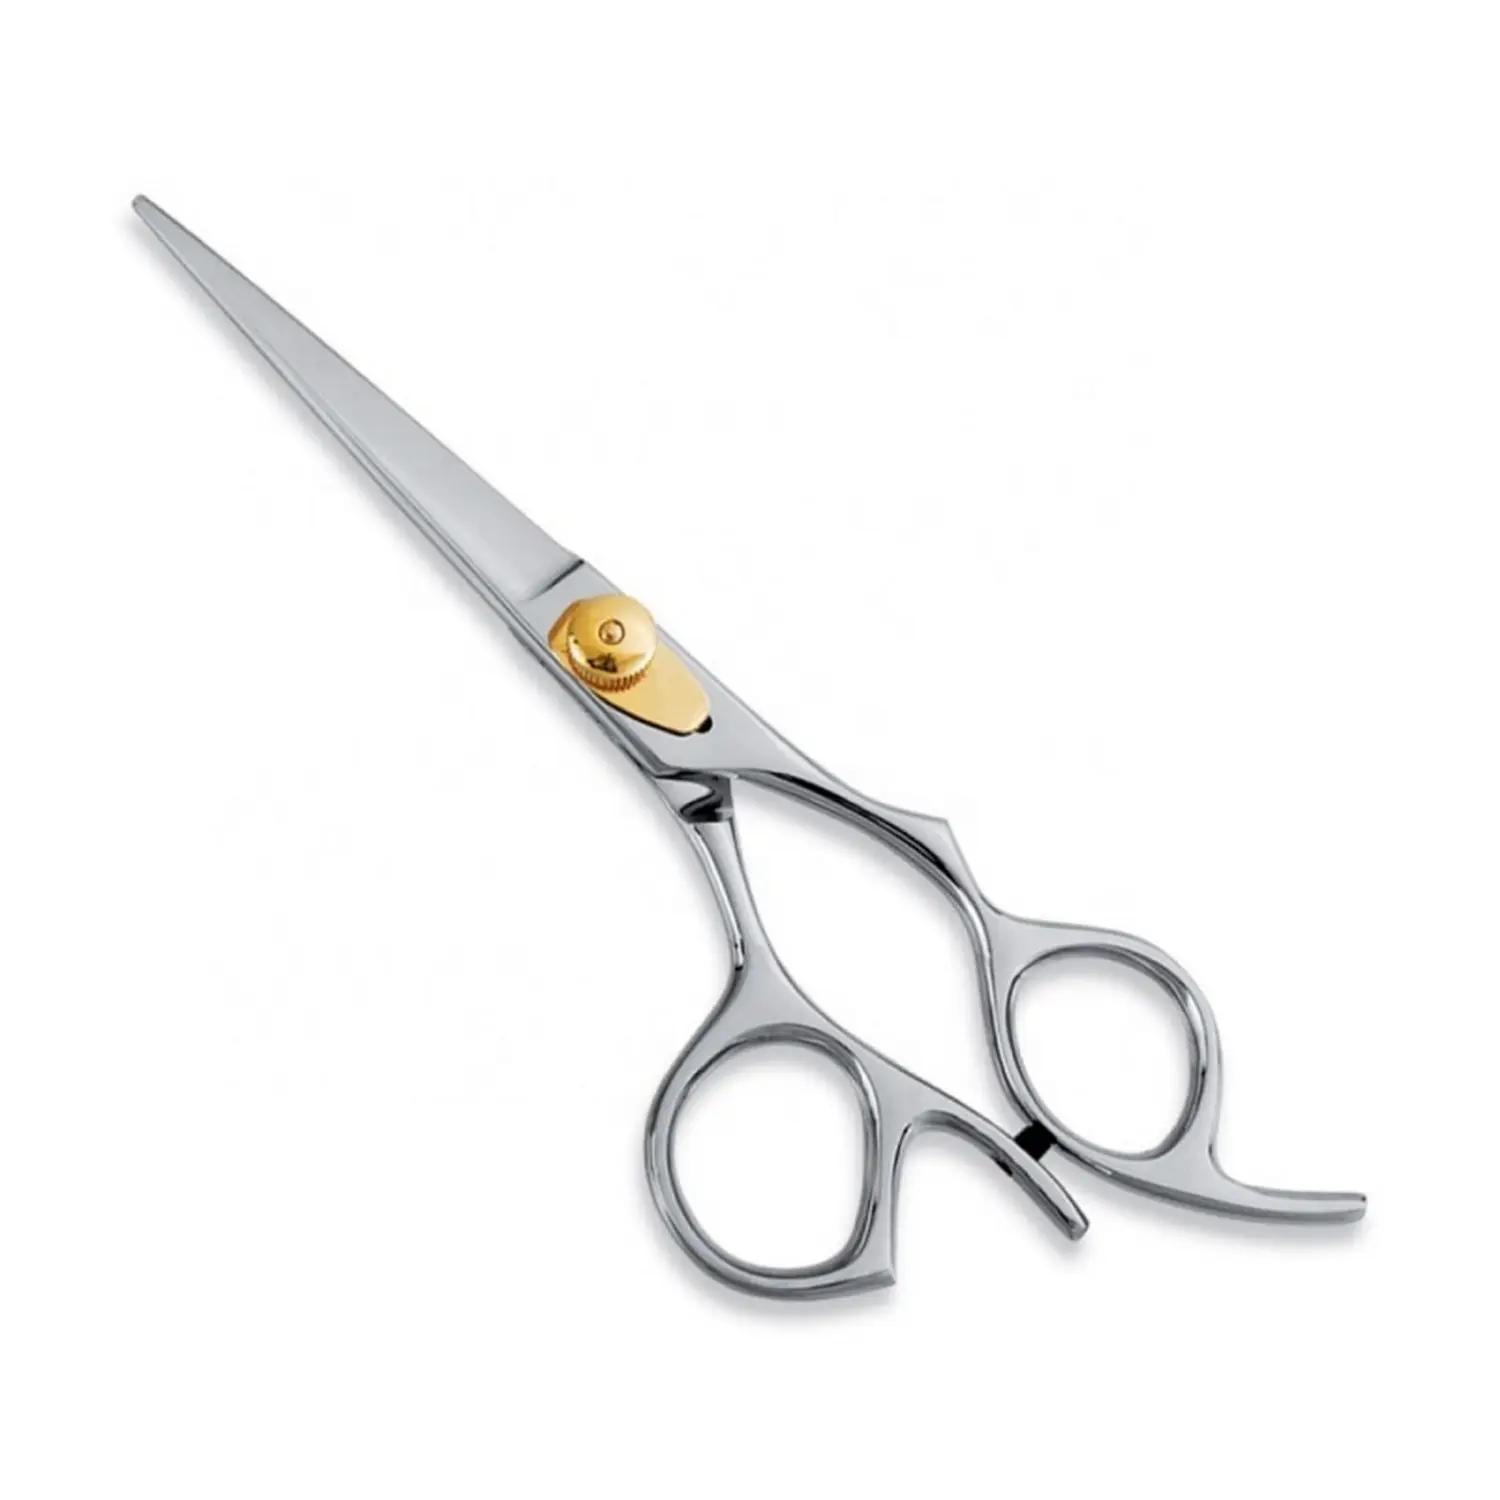 Cutting scissors. Japanese Stainless Steel 5.5 ножницы для парикмахера. Ножницы Beauty instruments. Ножницы для стрижки Тигер. Ножницы парикмахерские стрижка.